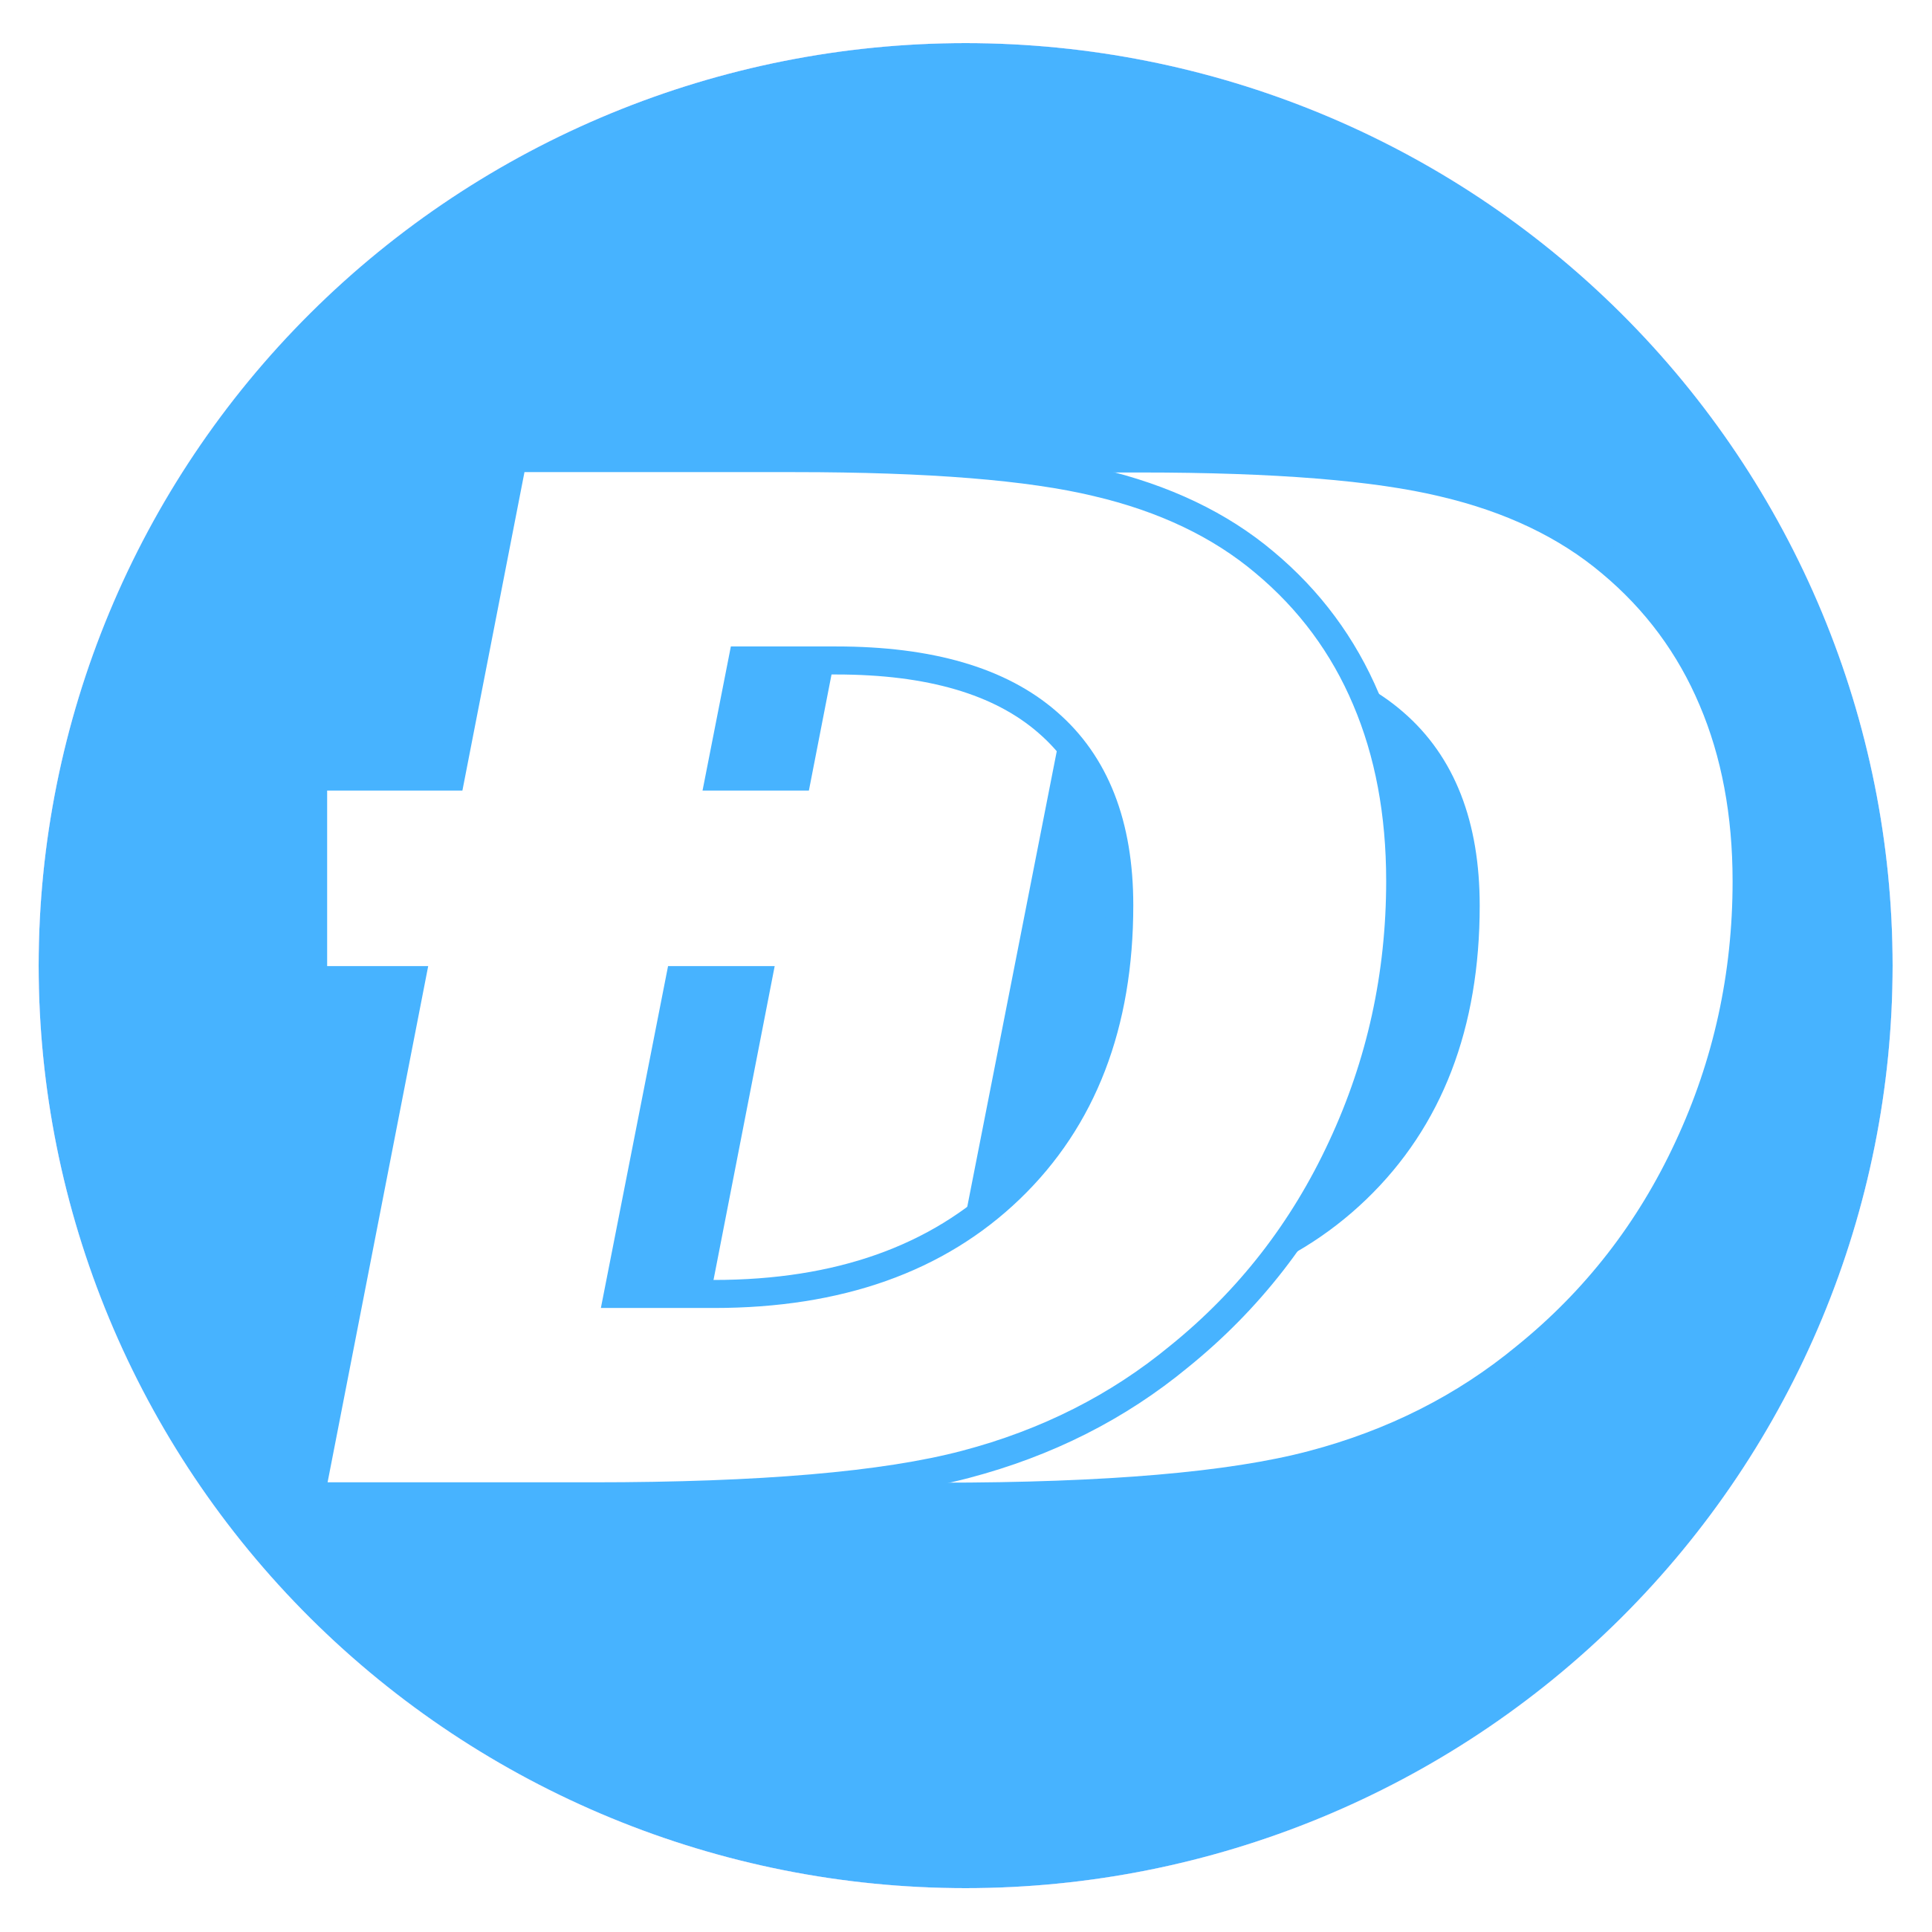 DemoDay &ldquo;DD&rdquo; logo.